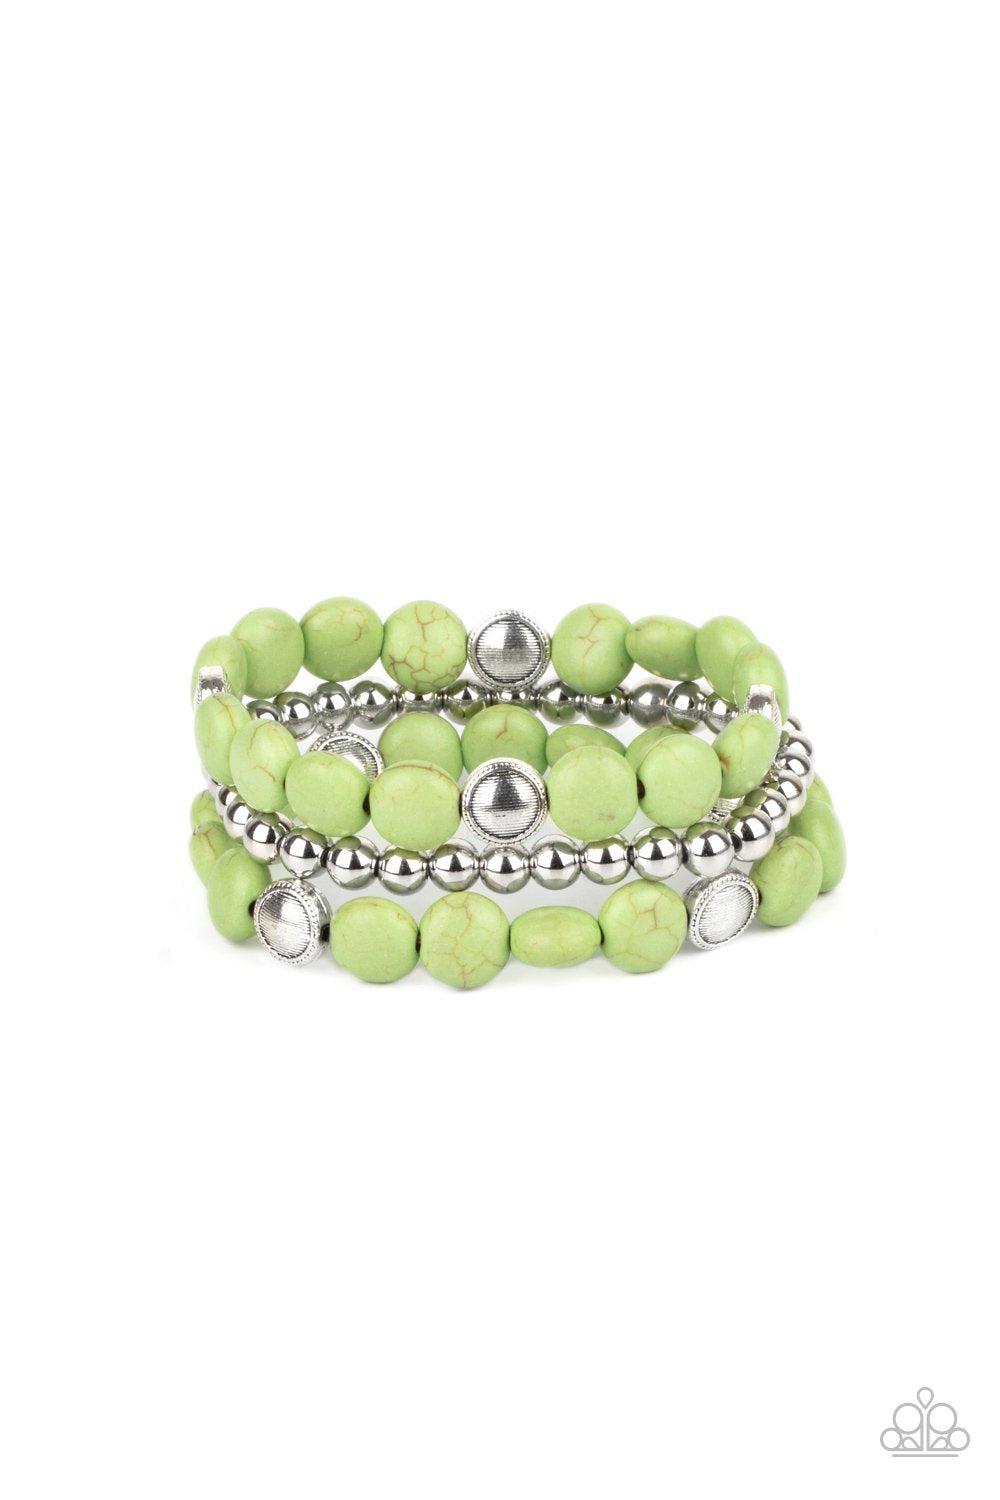 Desert Verbena Green Stone Bracelet Set - Paparazzi Accessories- lightbox - CarasShop.com - $5 Jewelry by Cara Jewels